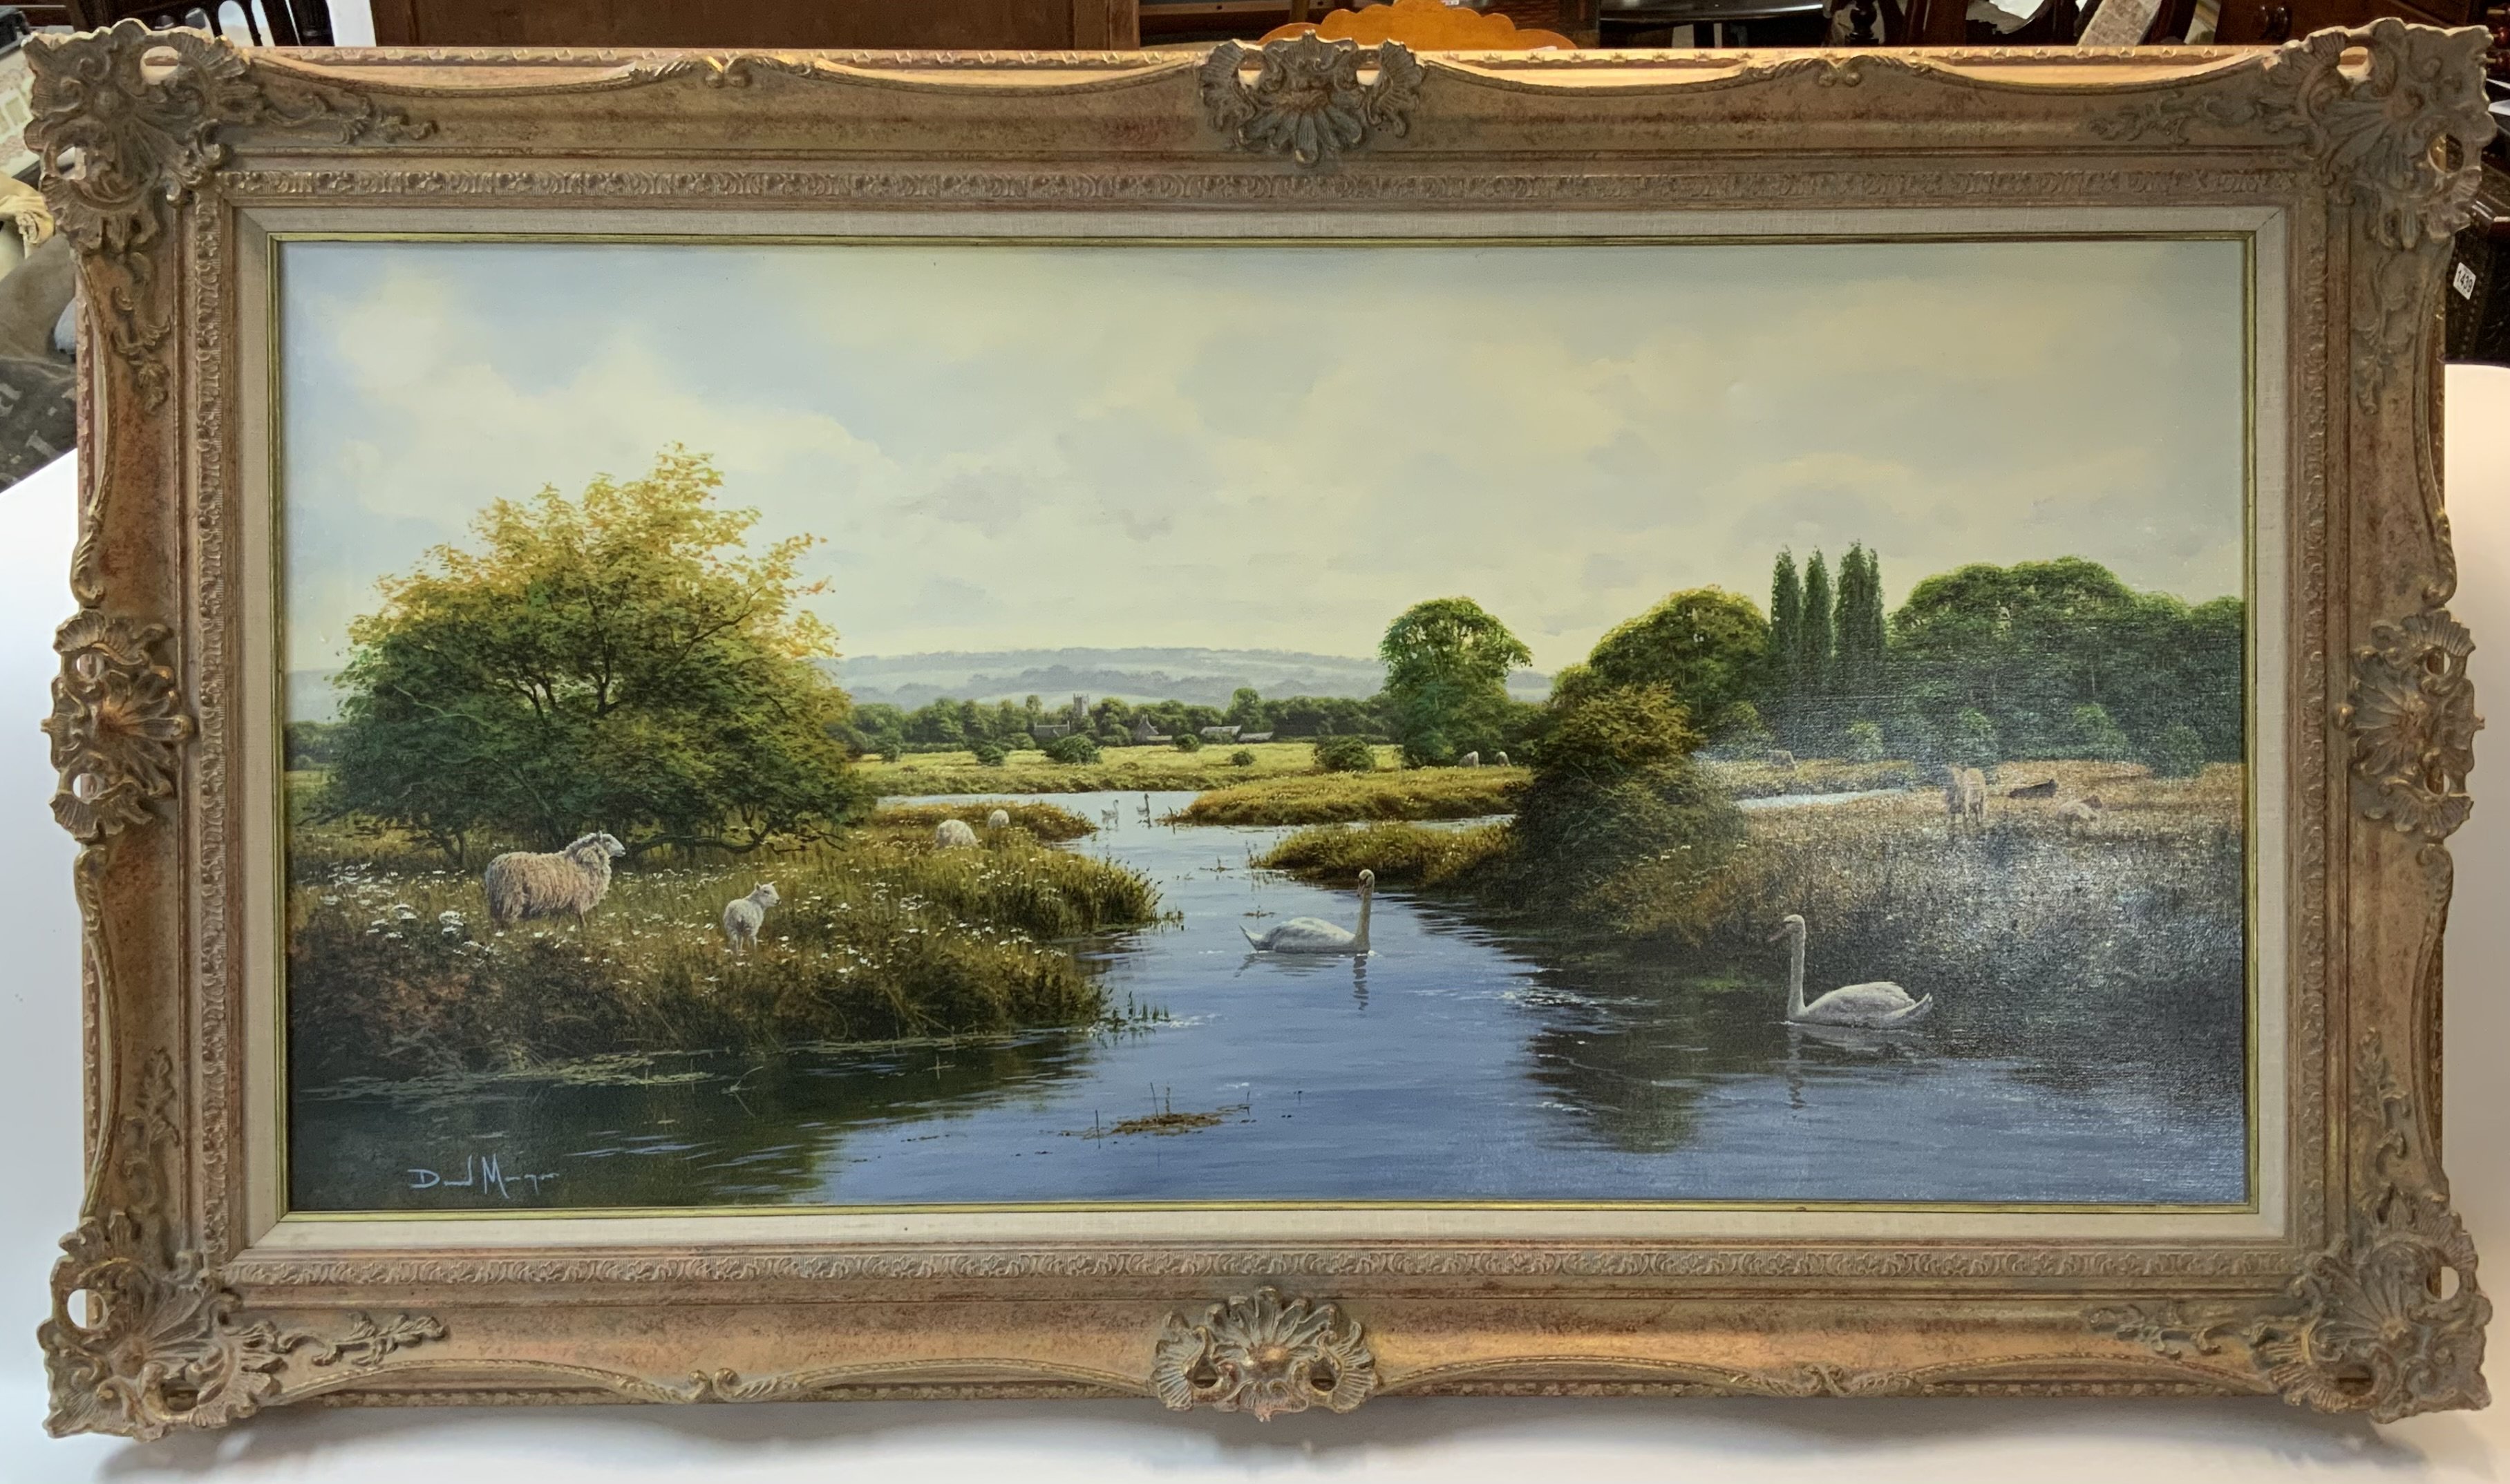 A David Morgan oil on canvas landscape painting. 1